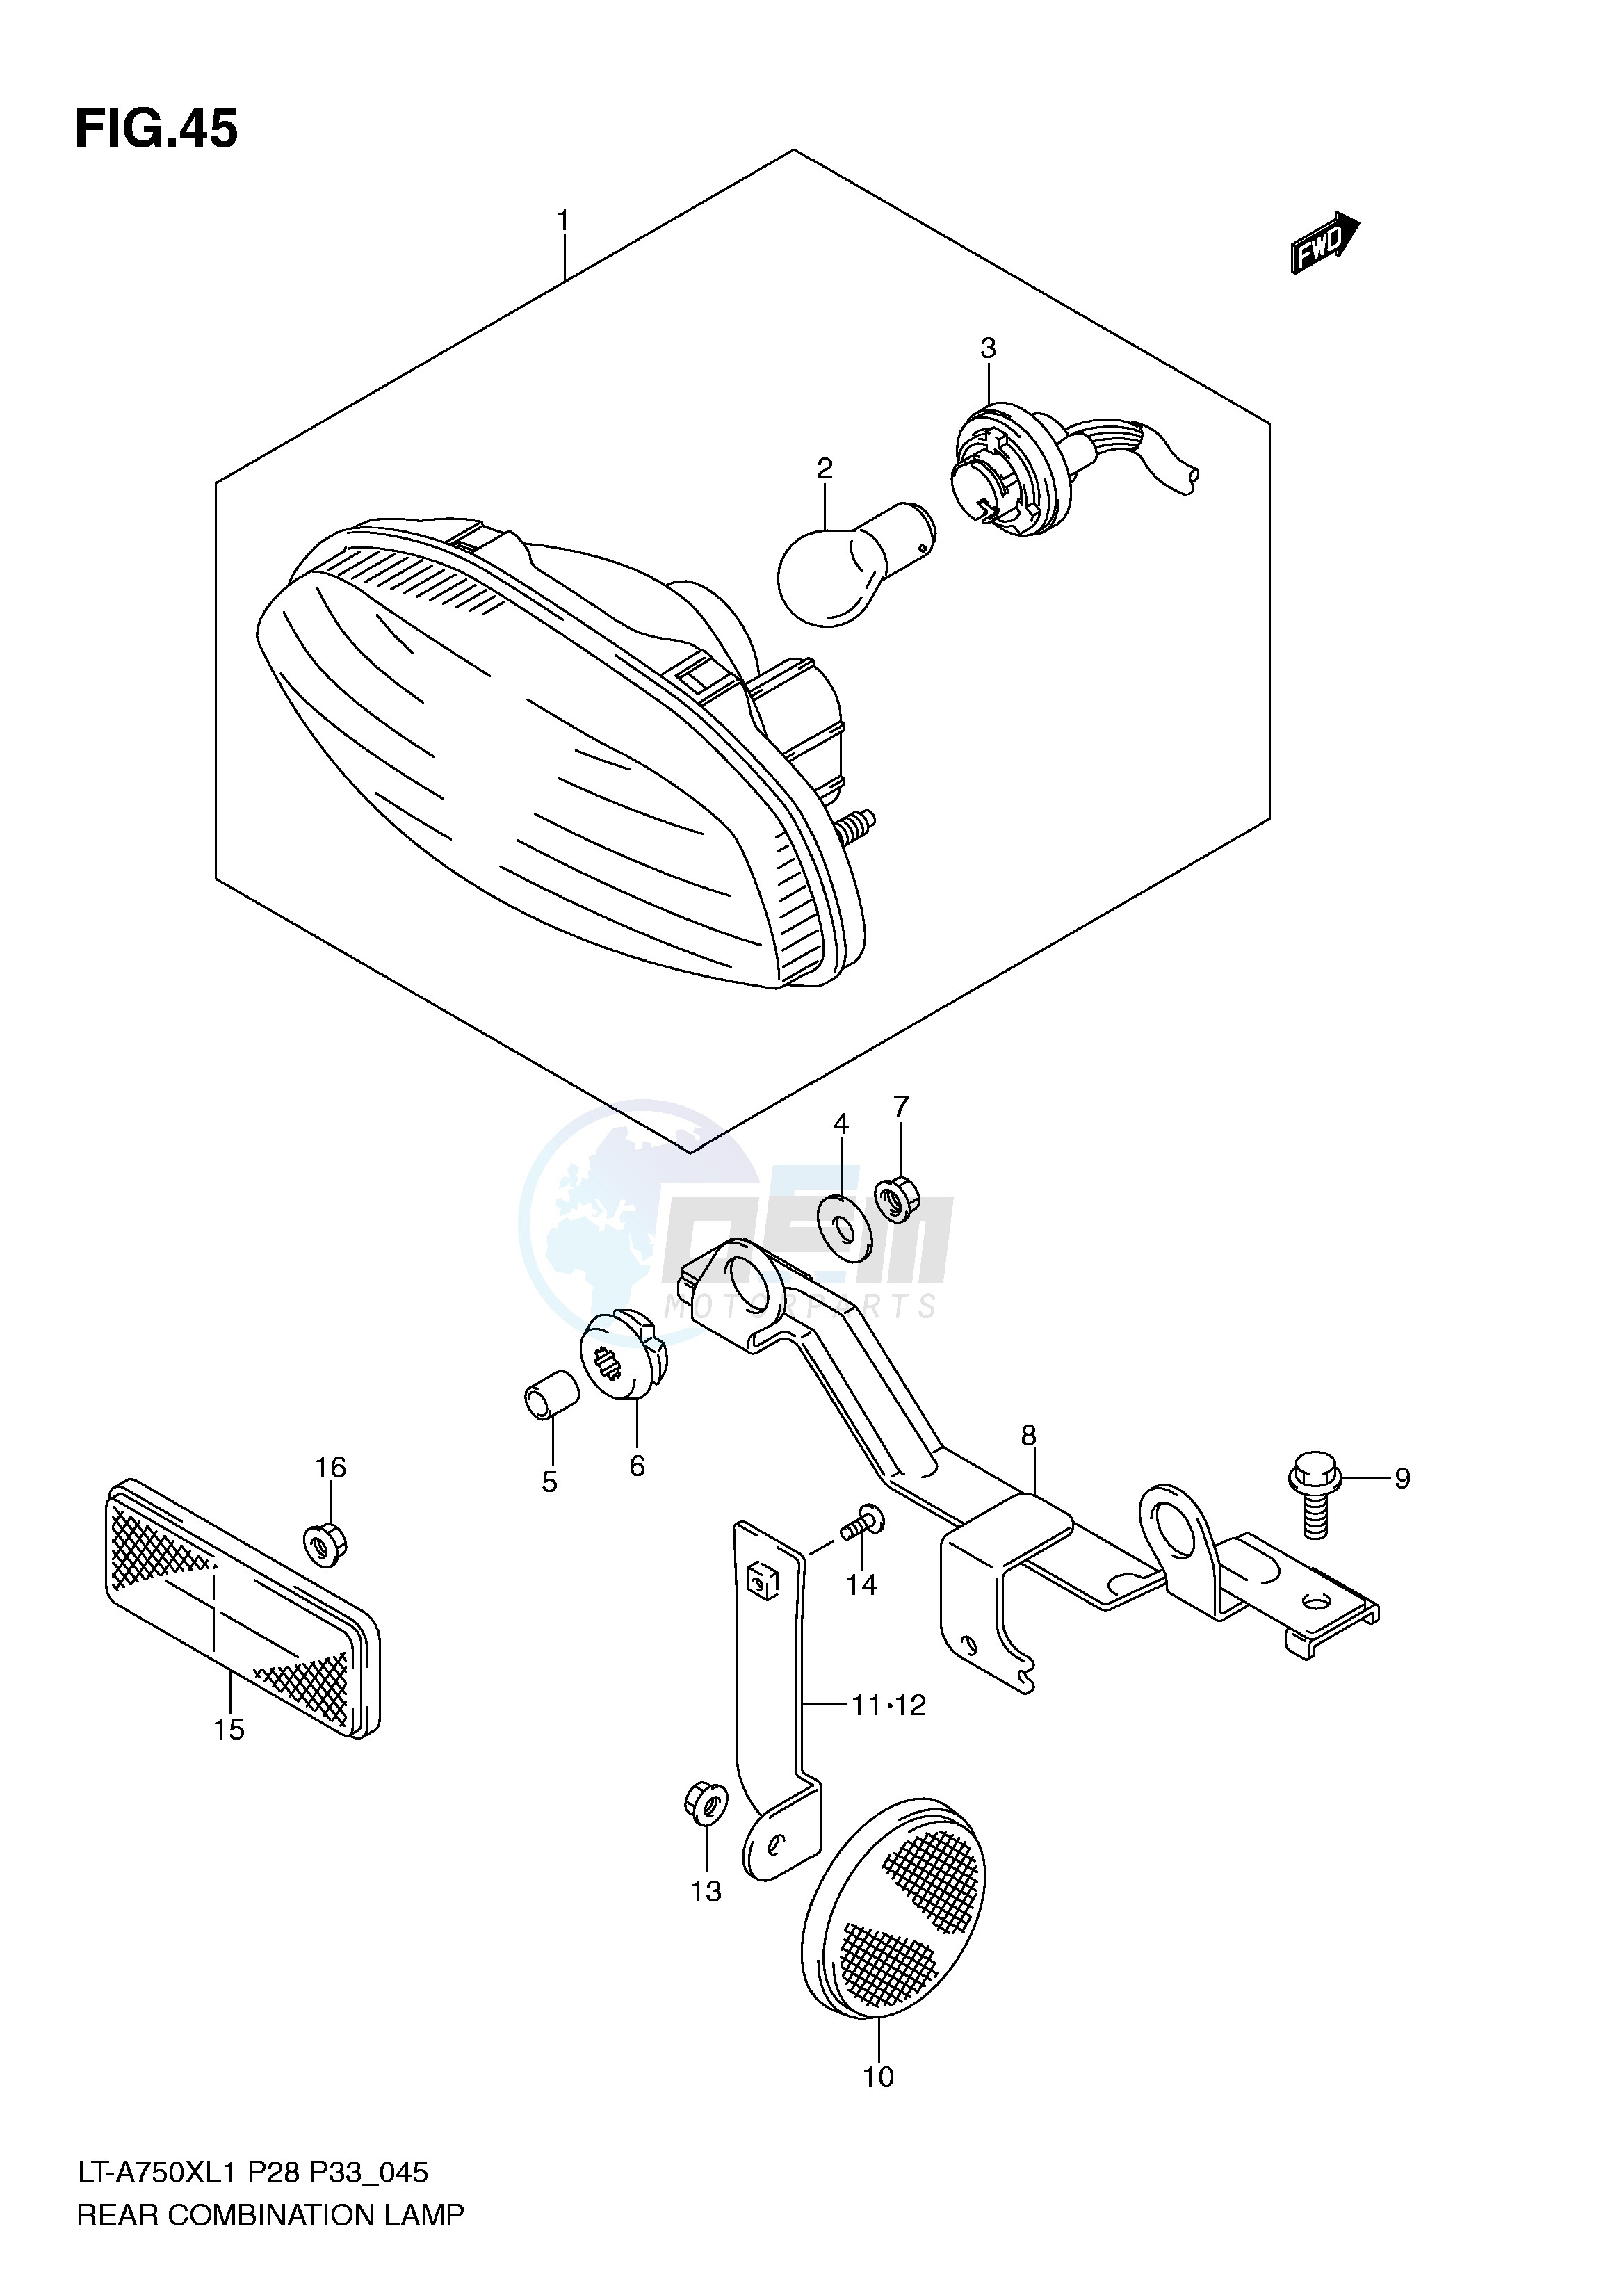 REAR COMBINATION LAMP (LT-A750XZL1 P28) image